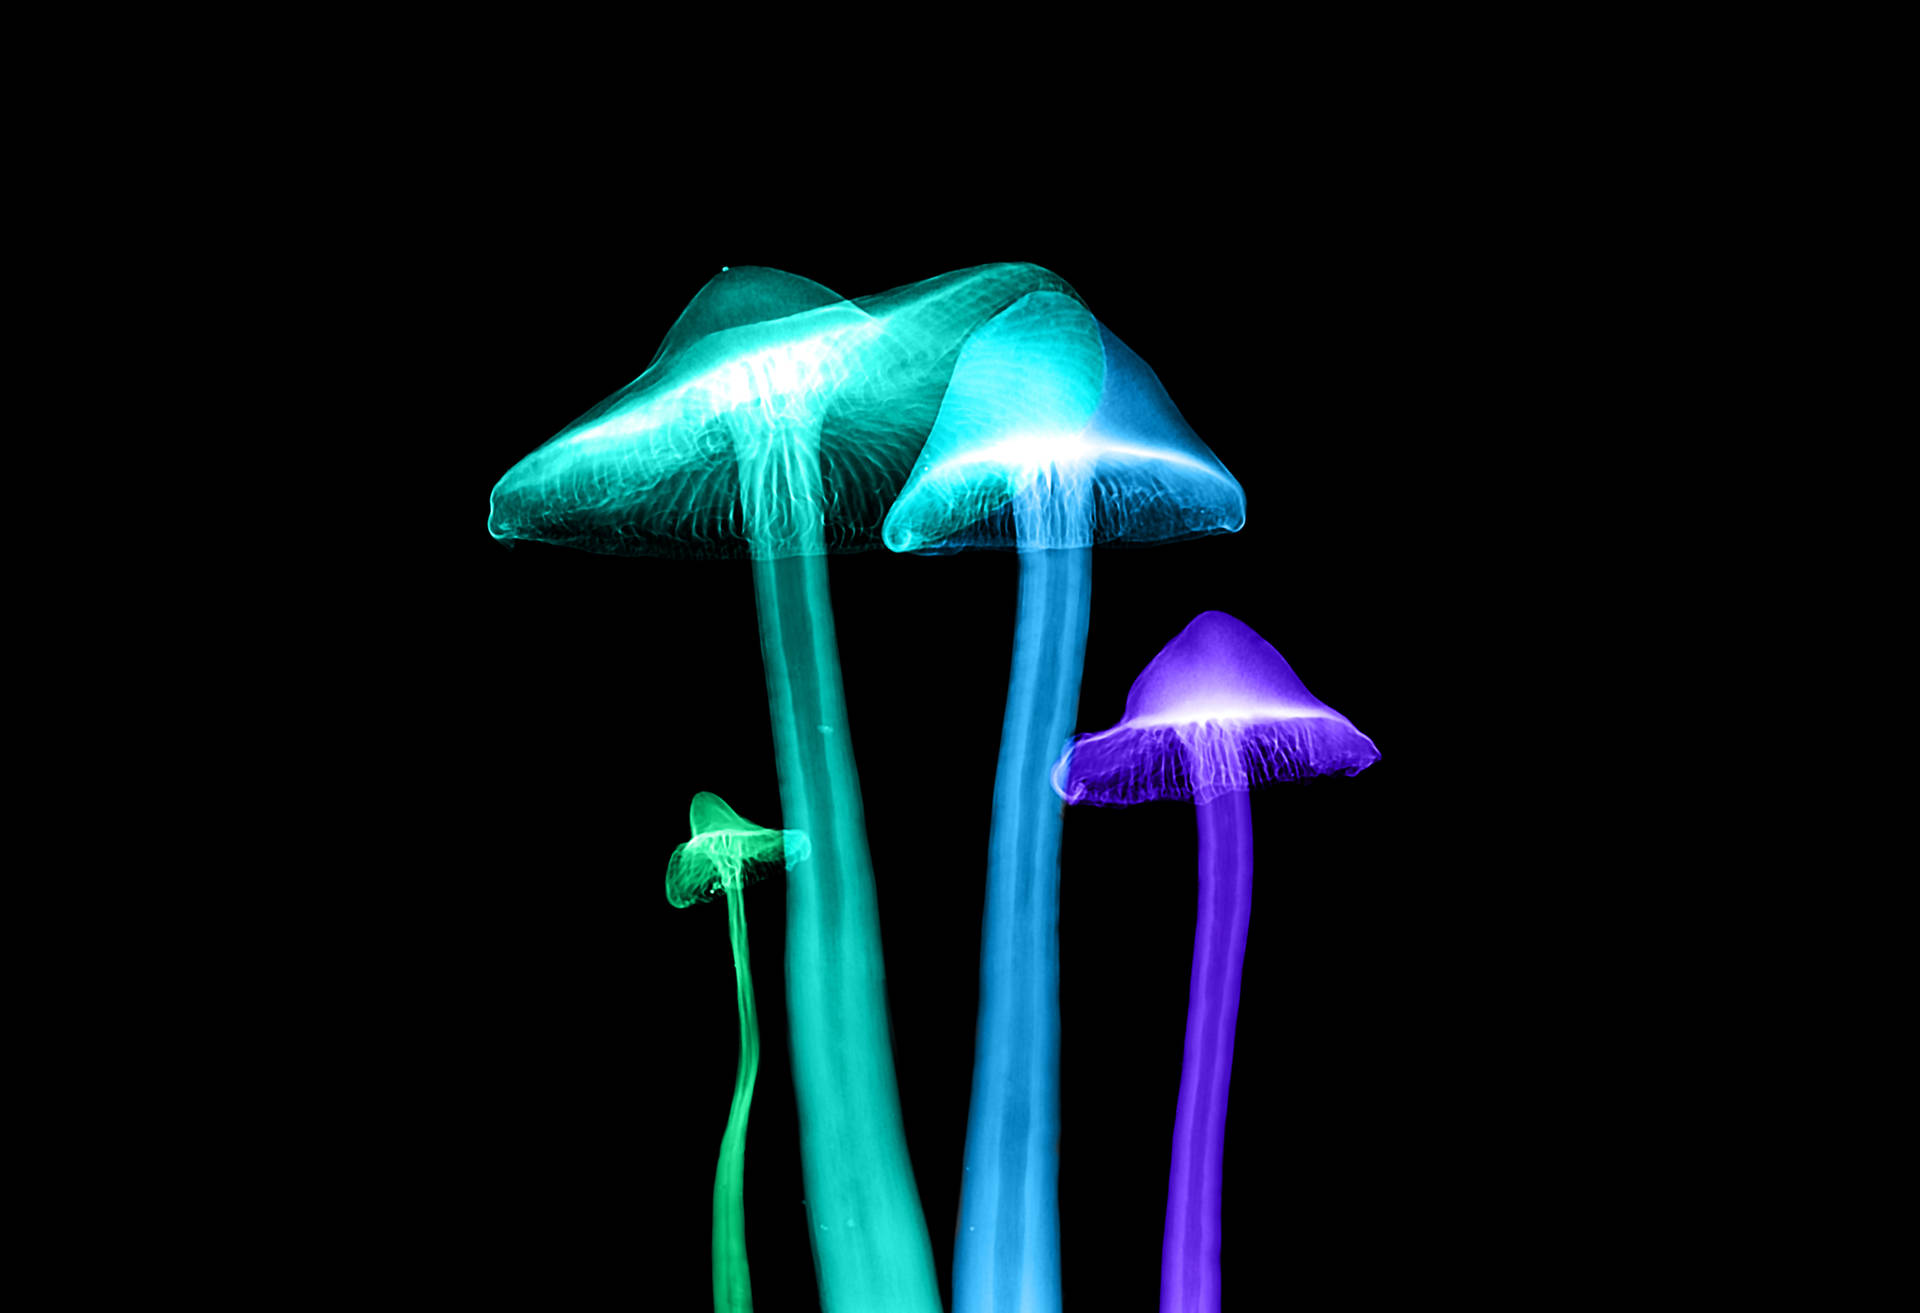 A Beautiful Display Of Glowing Mushroom Lights.